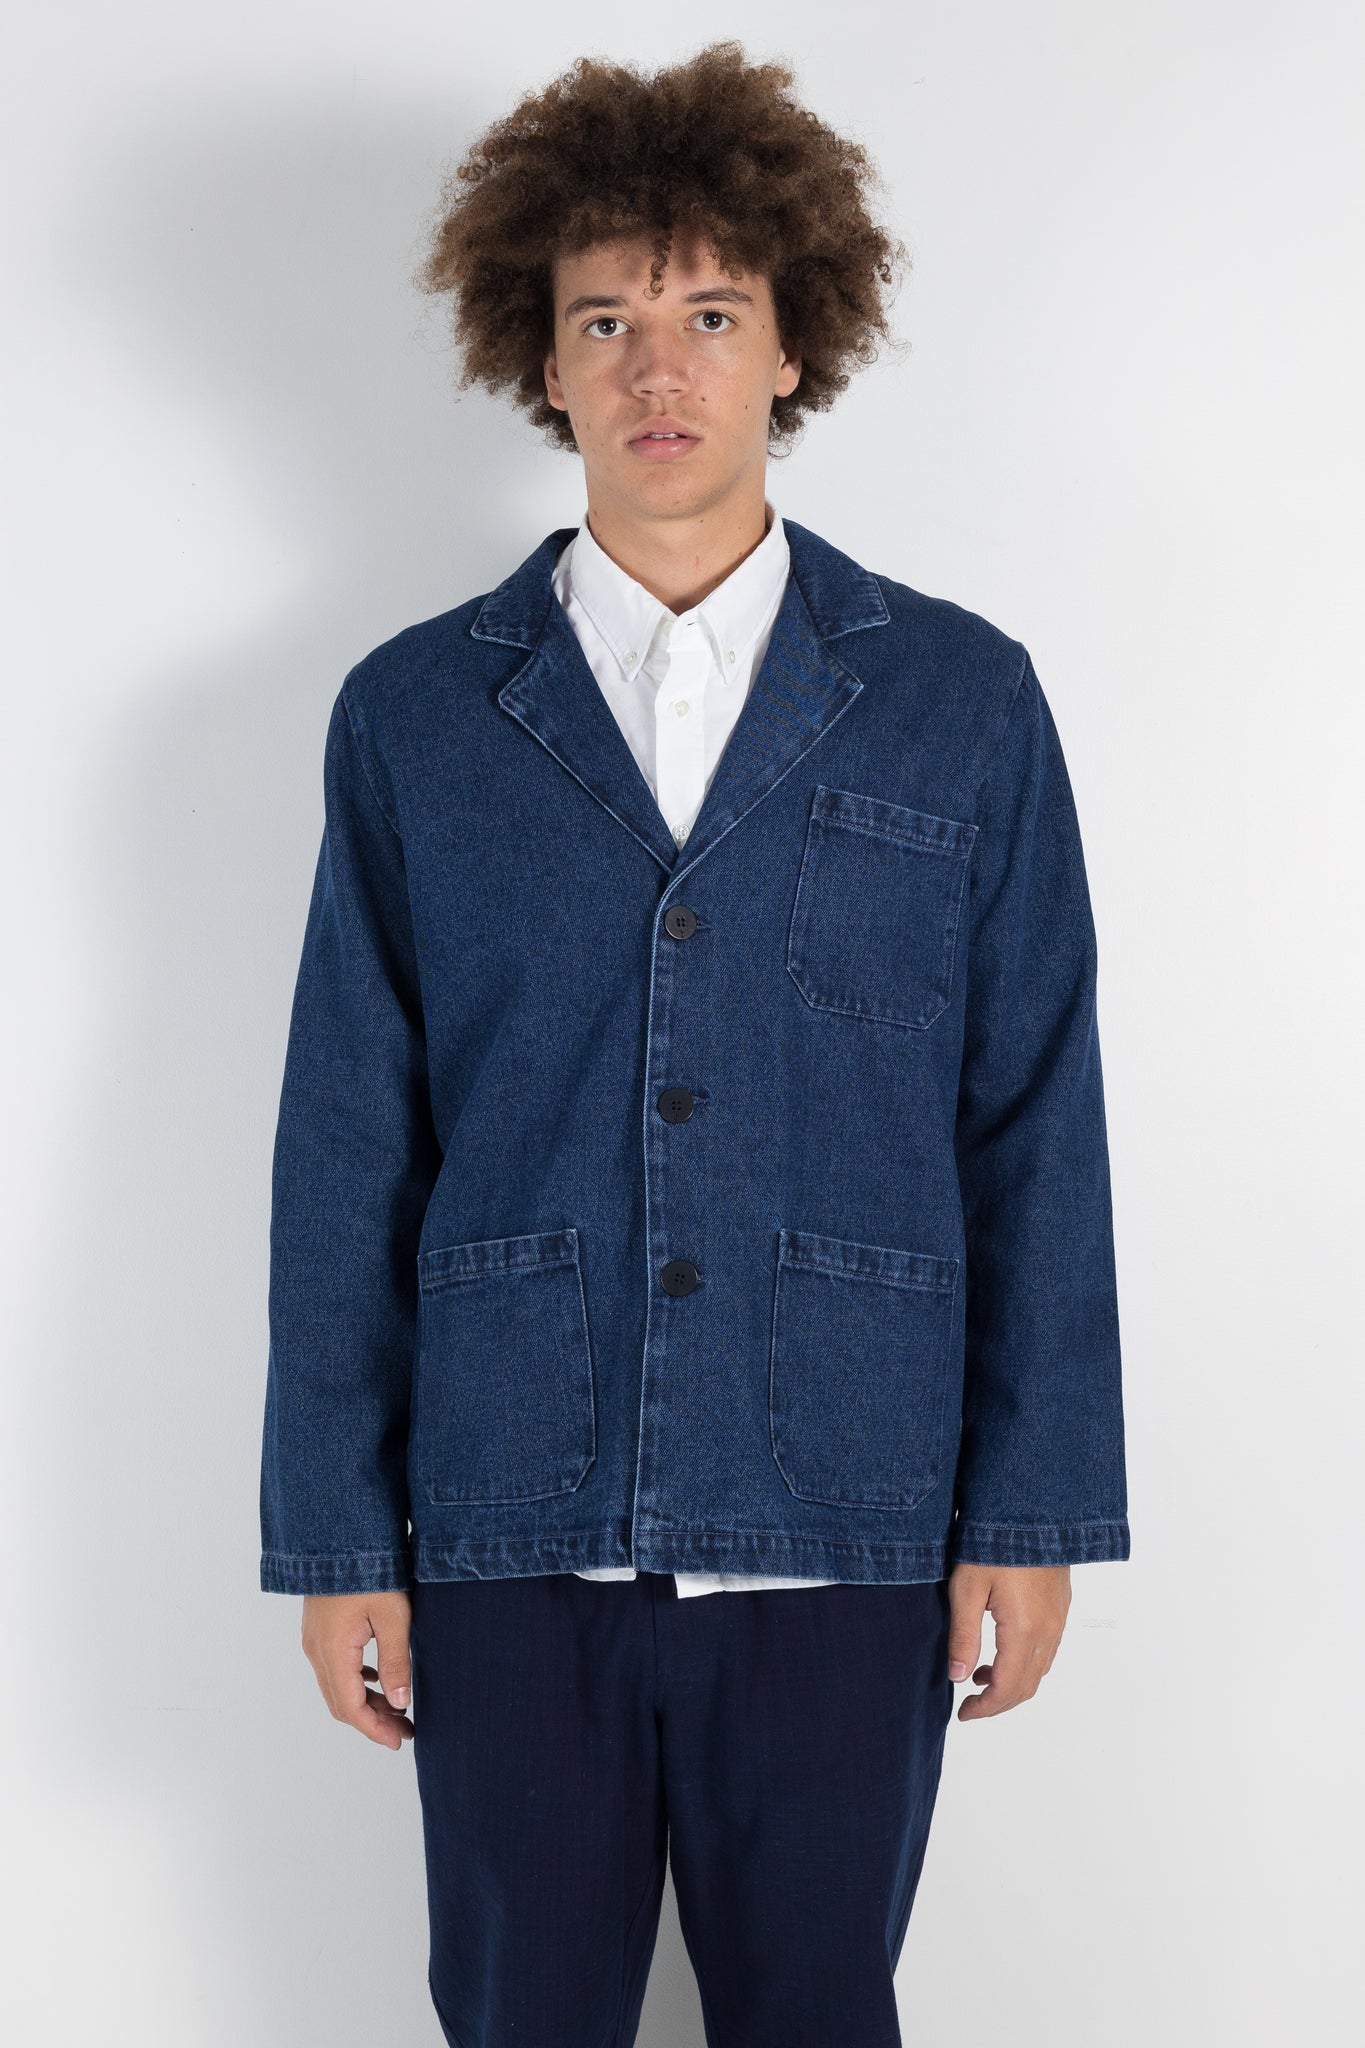 Mens Jacket | La Paz Sarmento jacket | The Standard Store